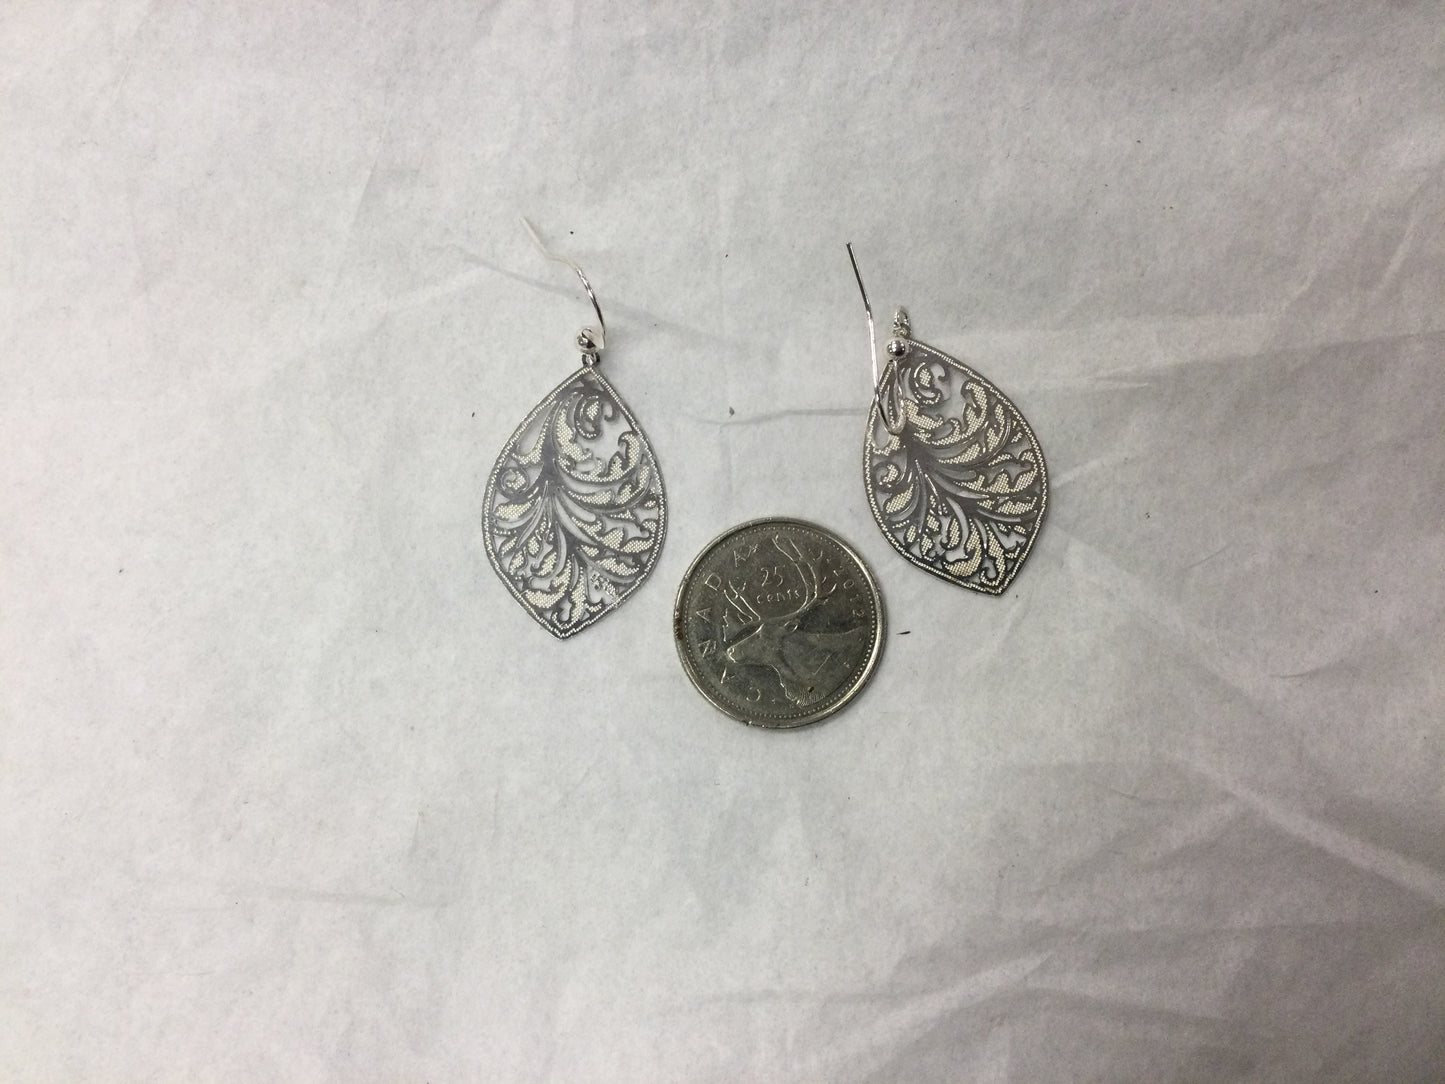 Lavishy earrings, leaf shape with leaf design